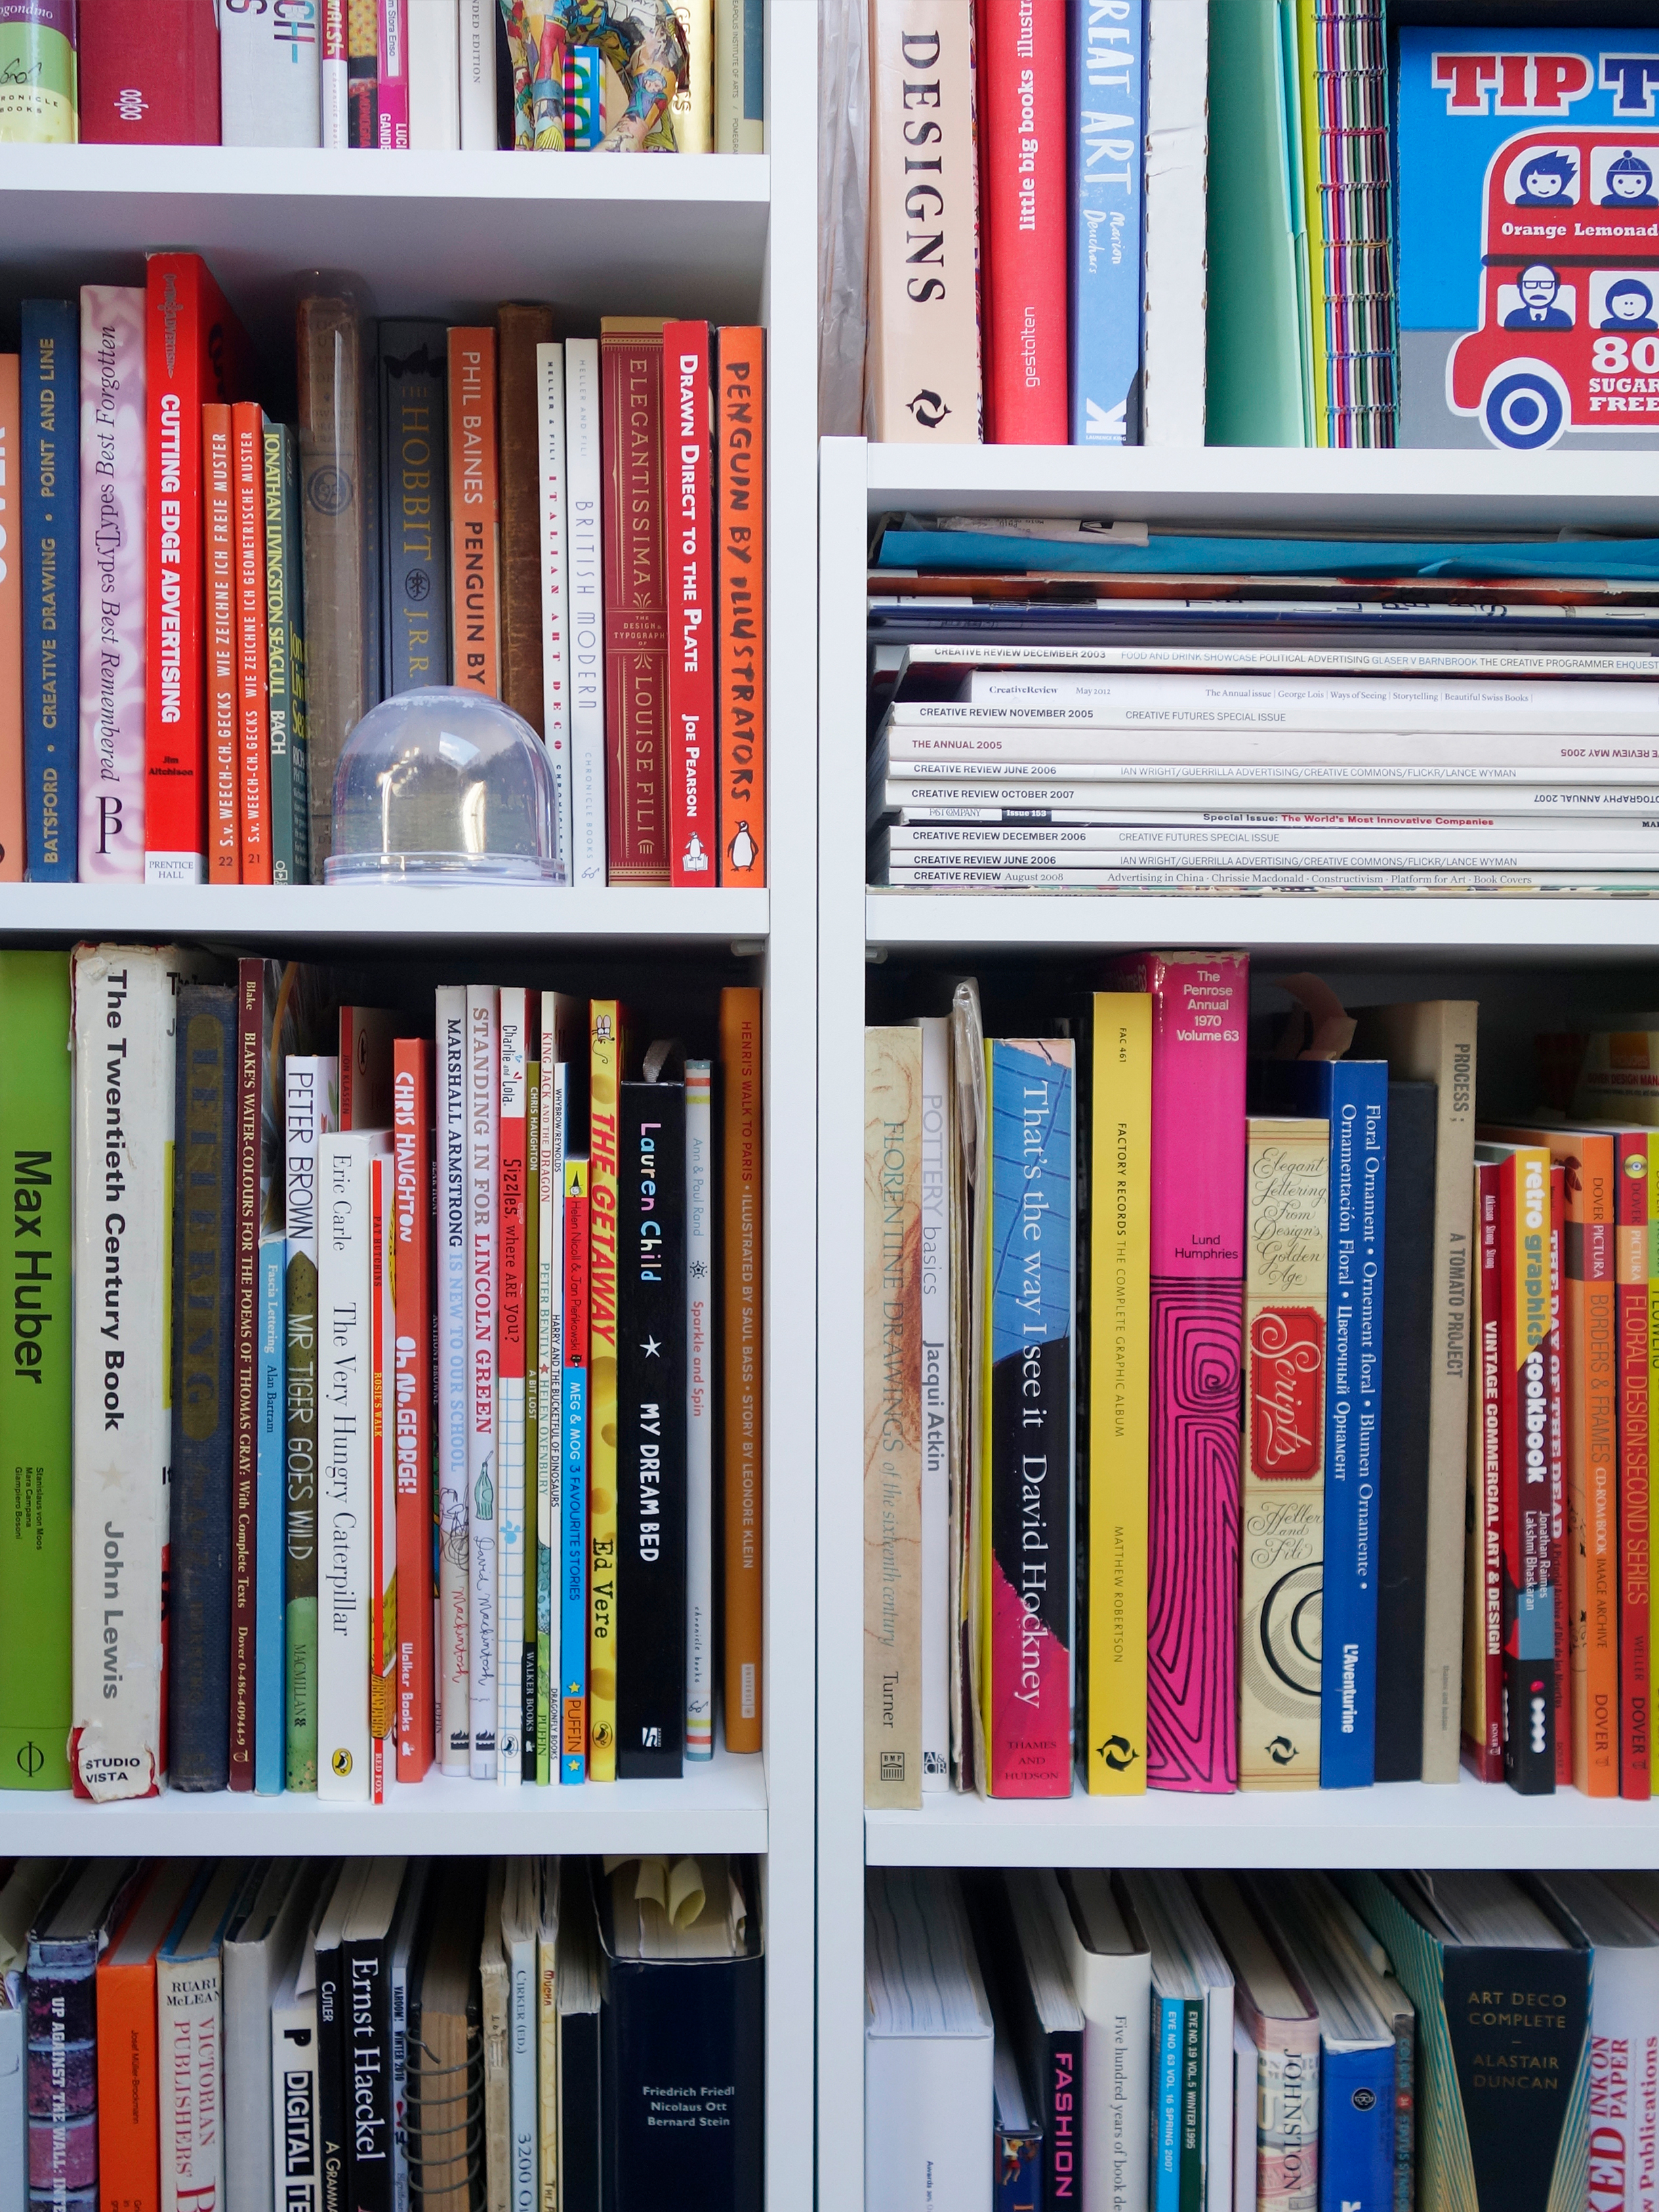 Coralie Bickford-Smith's Bookshelf